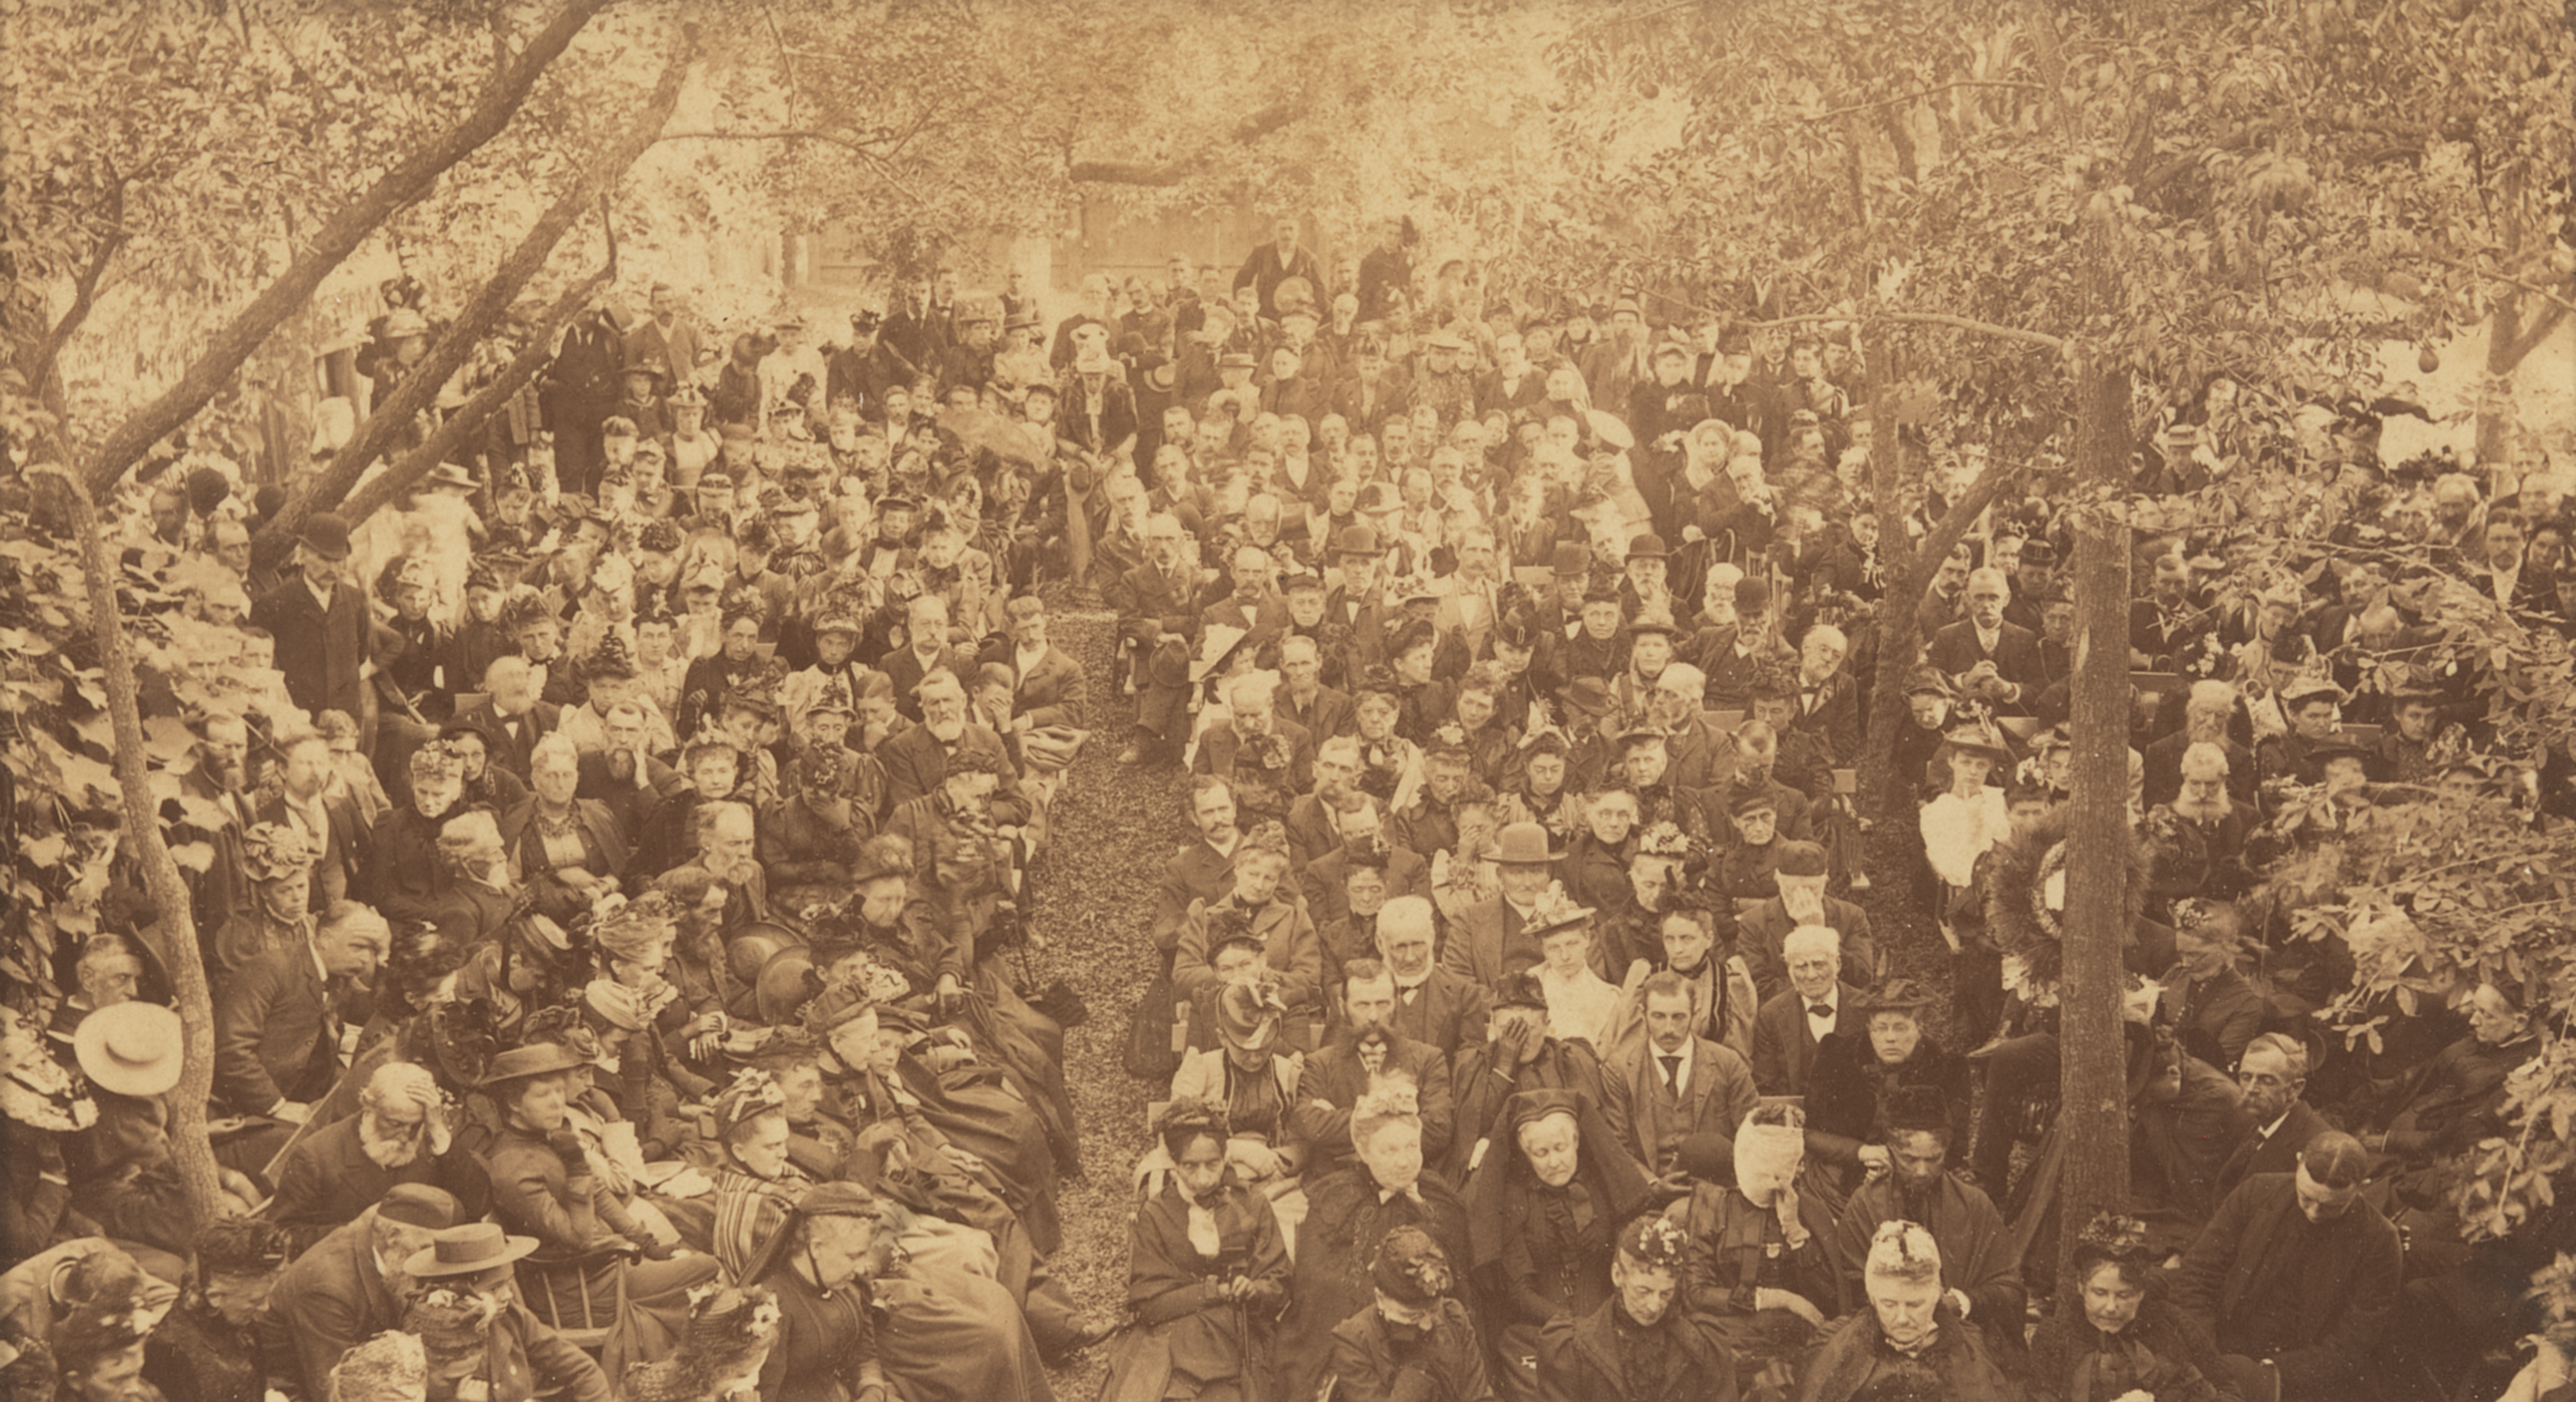 “John Greenleaf Whittier Funeral”, 1892, Amesbury, Mass.